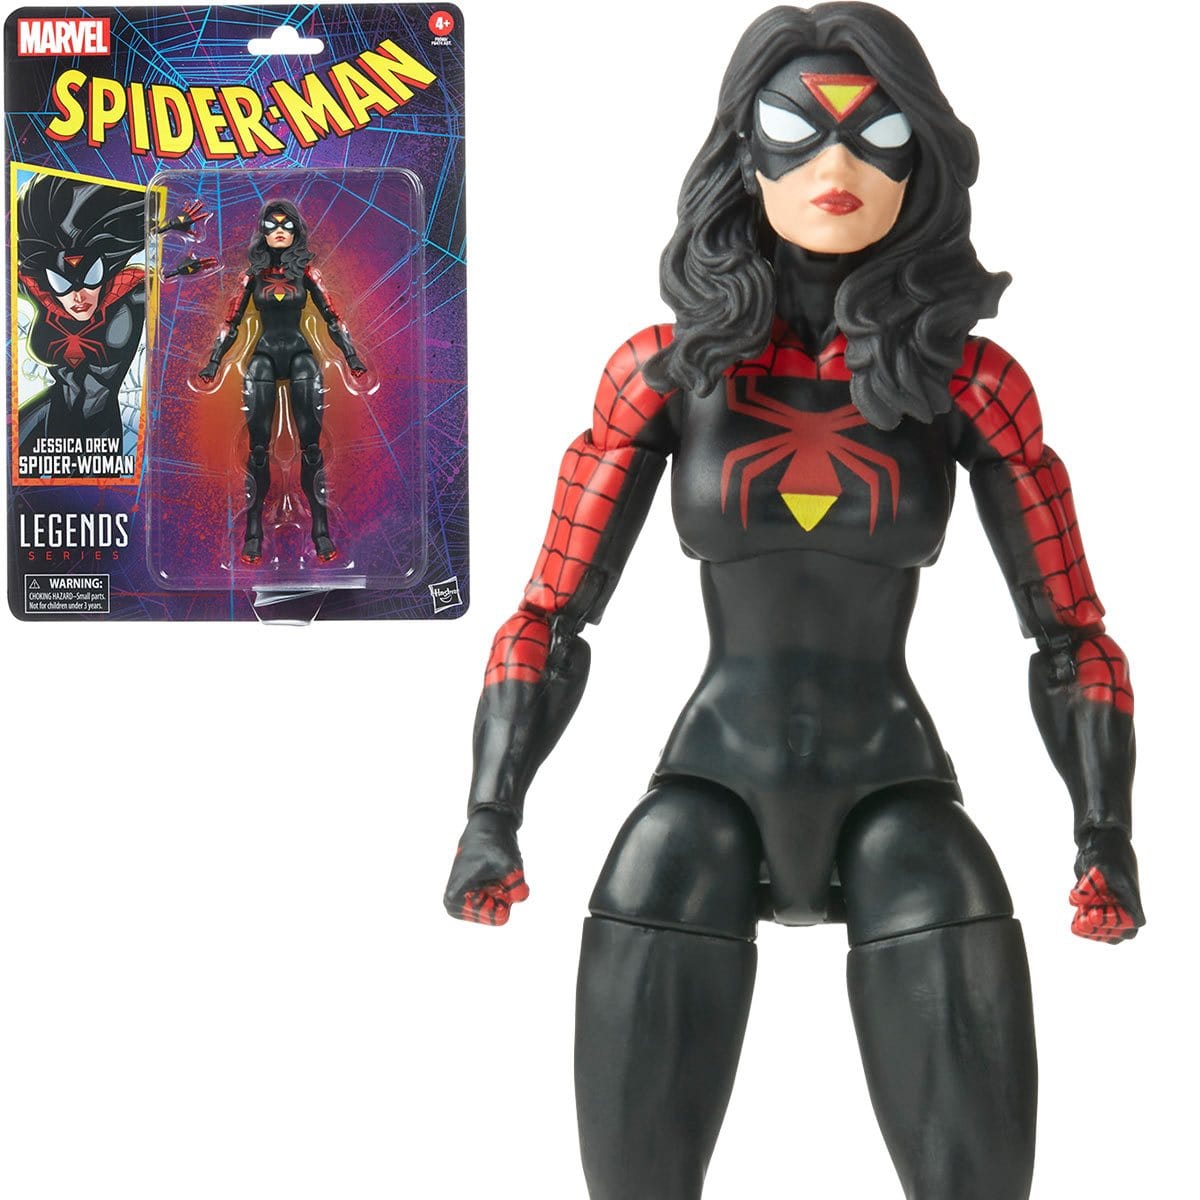 Spider-Man Retro Marvel Legends Jessica Drew Spider-Woman 6-Inch Action Figure With box